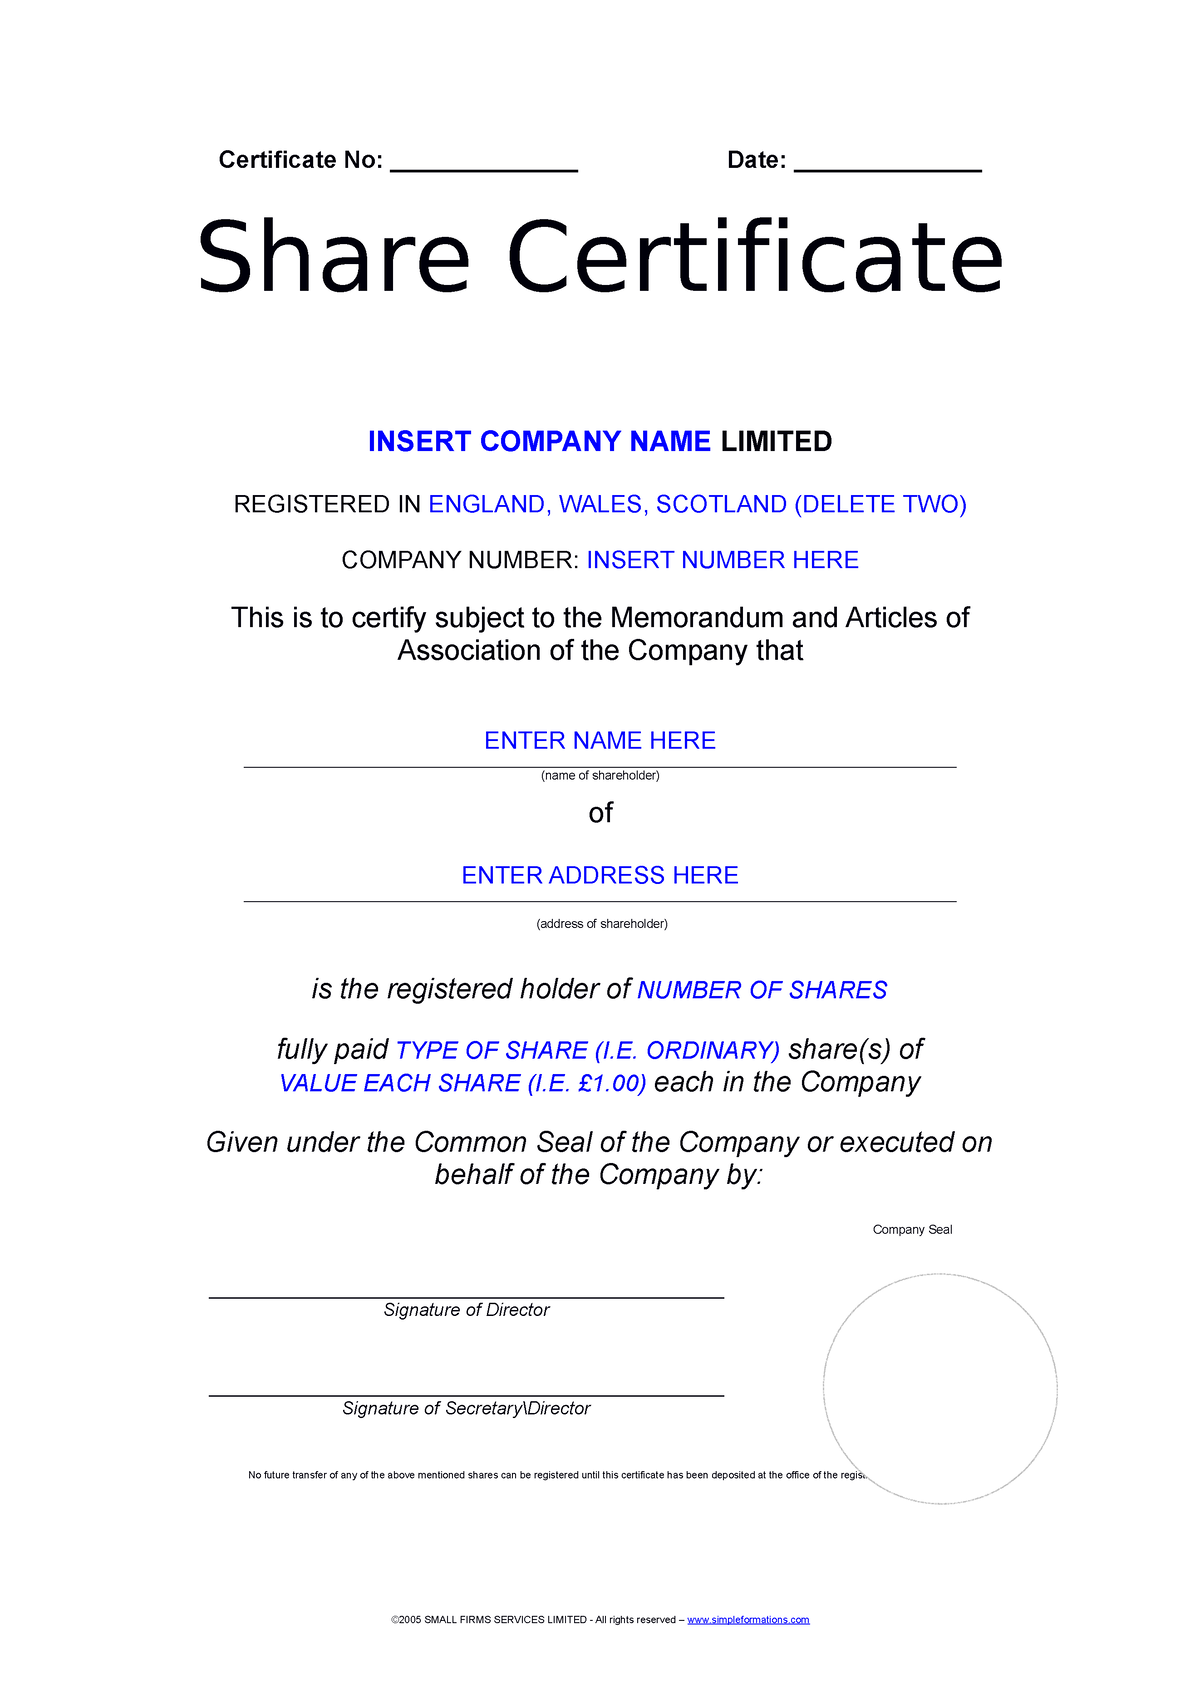 Share Certificate - TH Phân tích dữ liệu - Edit - Certificate No ...